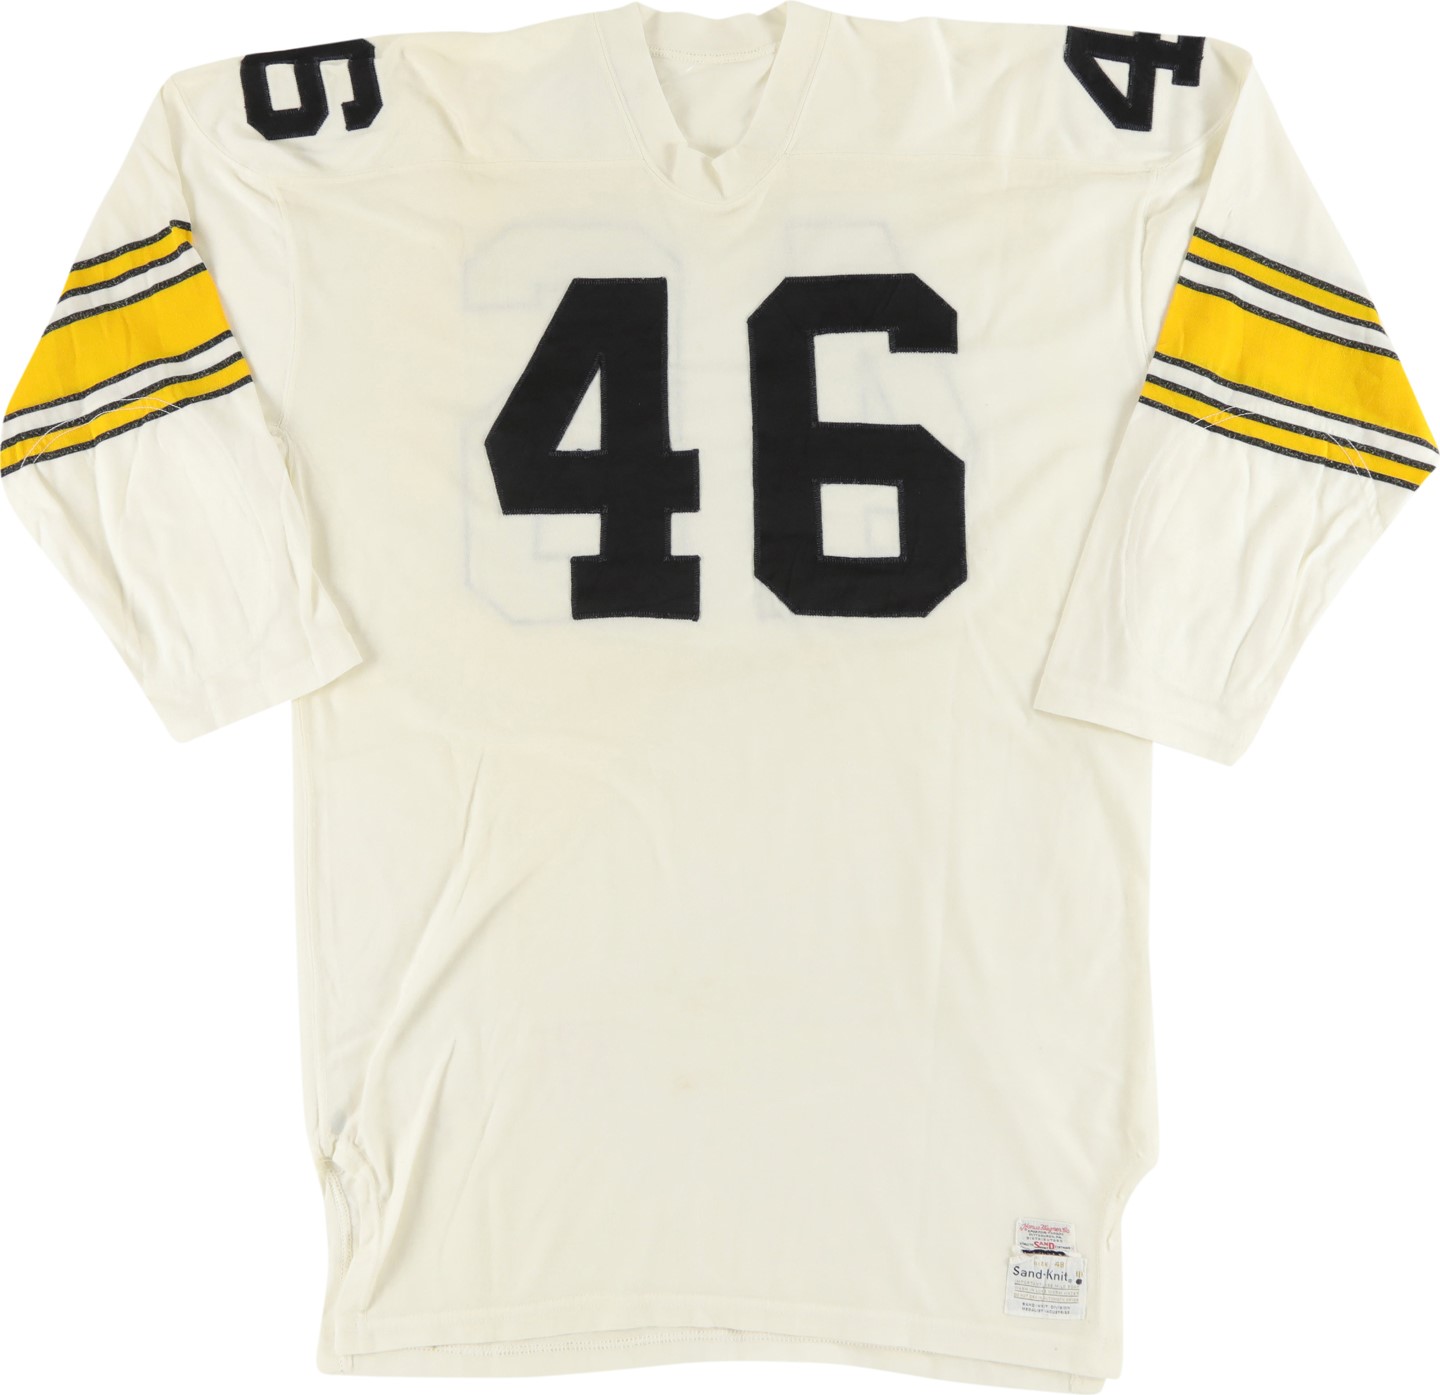 - Circa 1980s #46 Blank Pittsburgh Steelers Game Worn Jersey